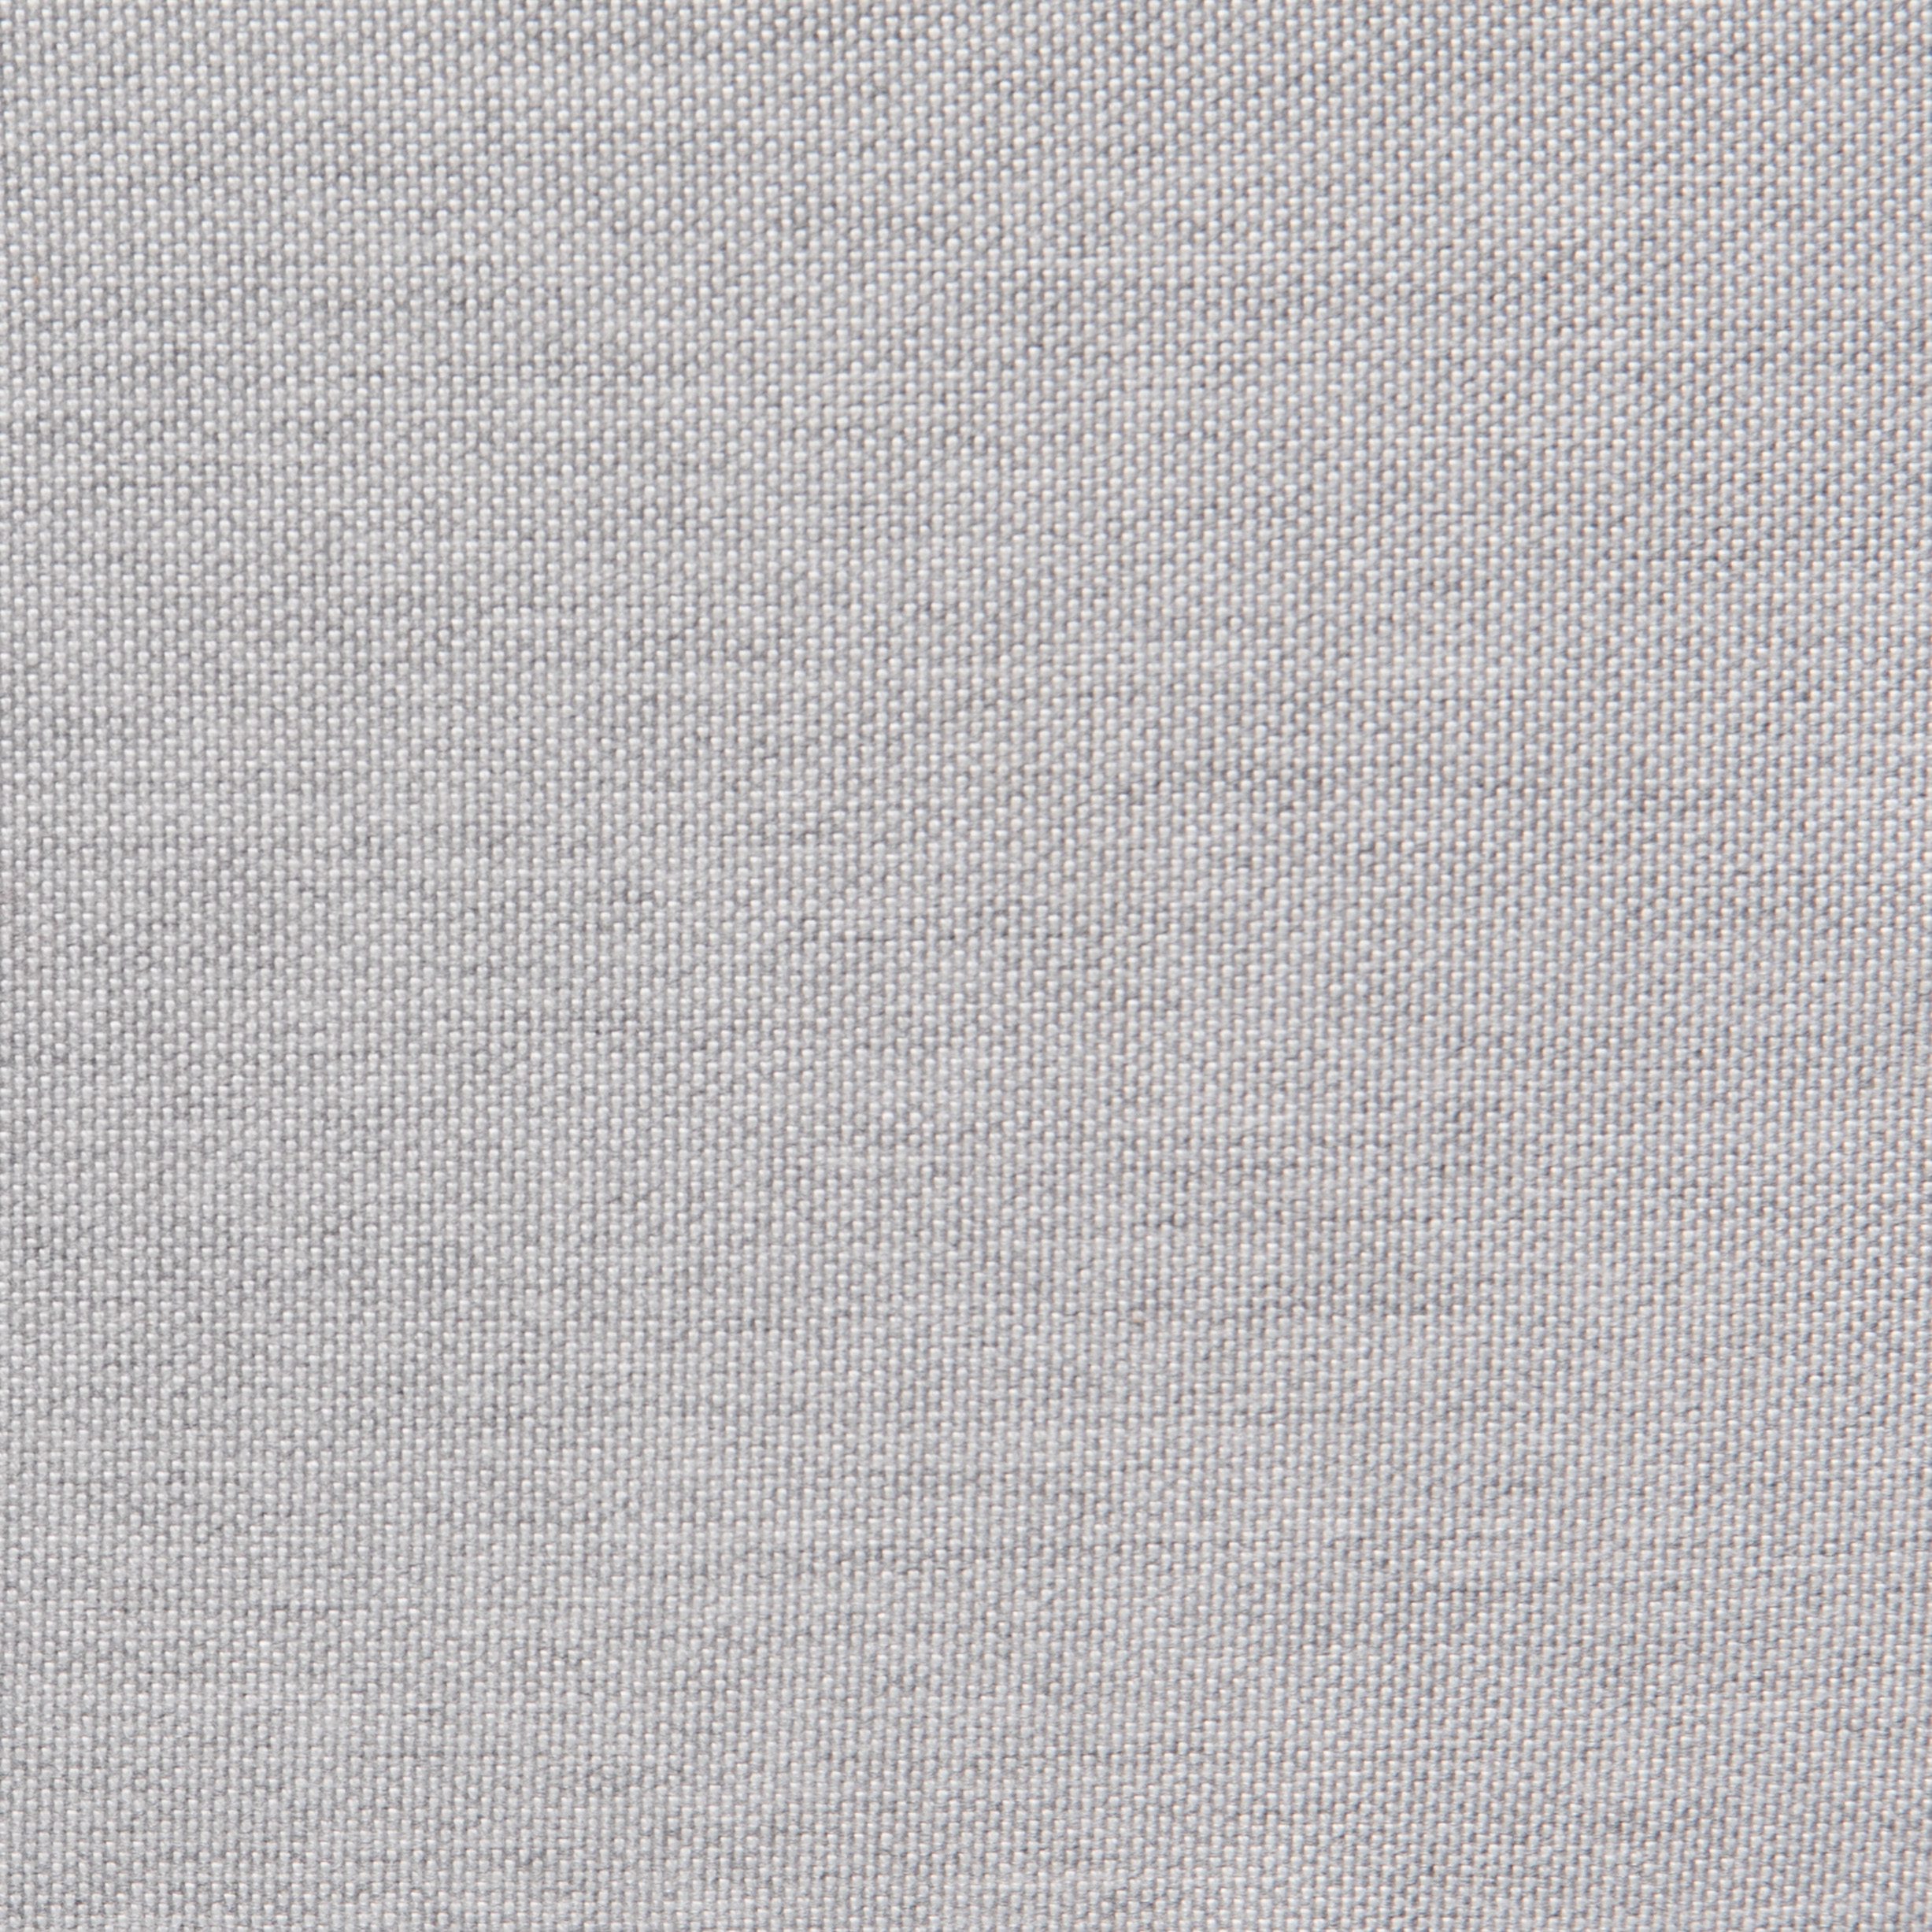 Image of Tabula Rasa Fashionable Grey